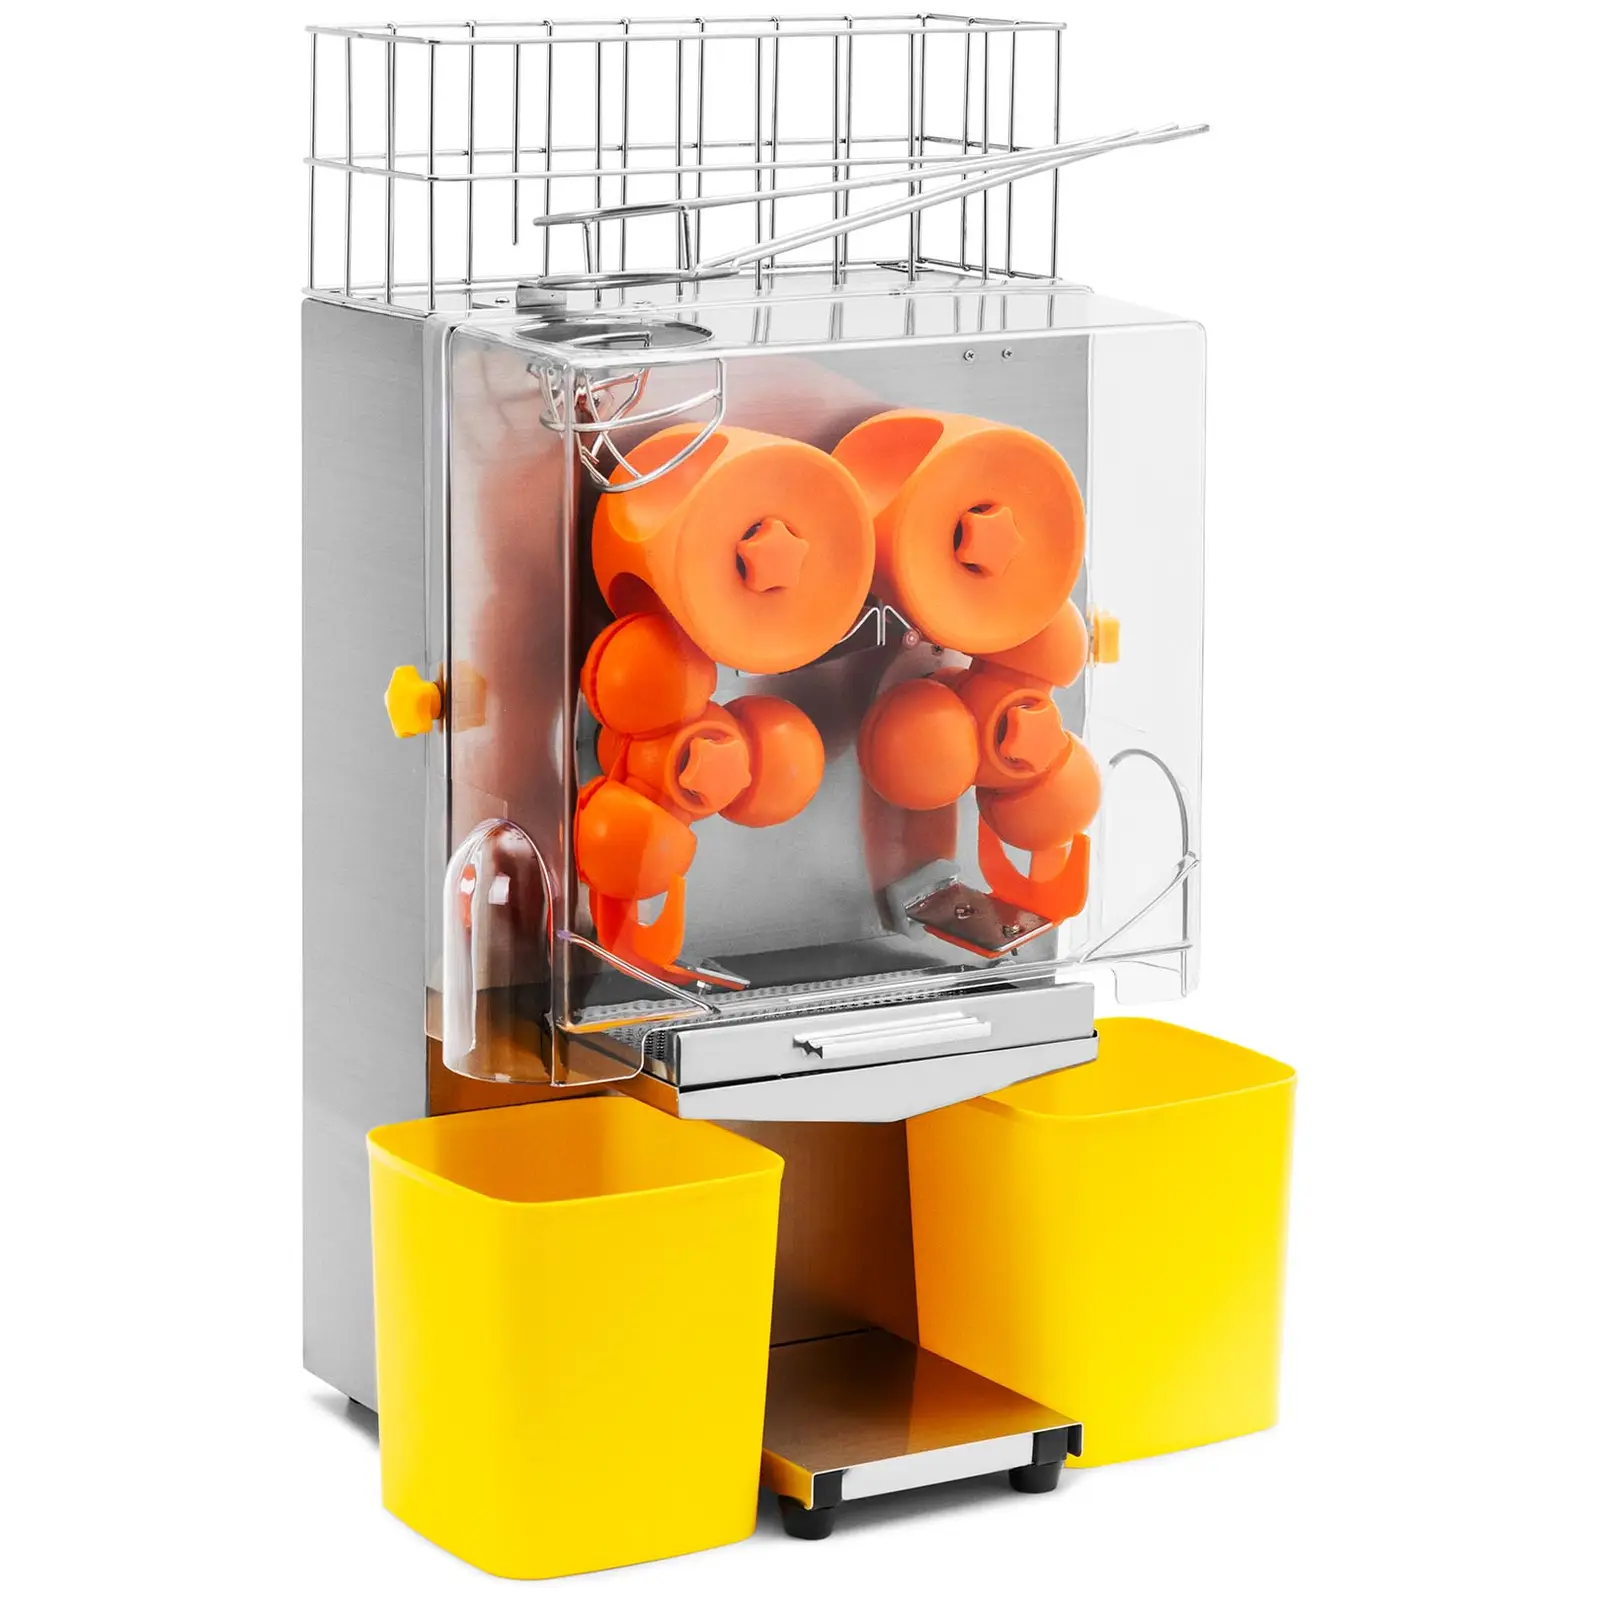 Exprimidor de naranjas eléctrico - 120 W - Royal Catering